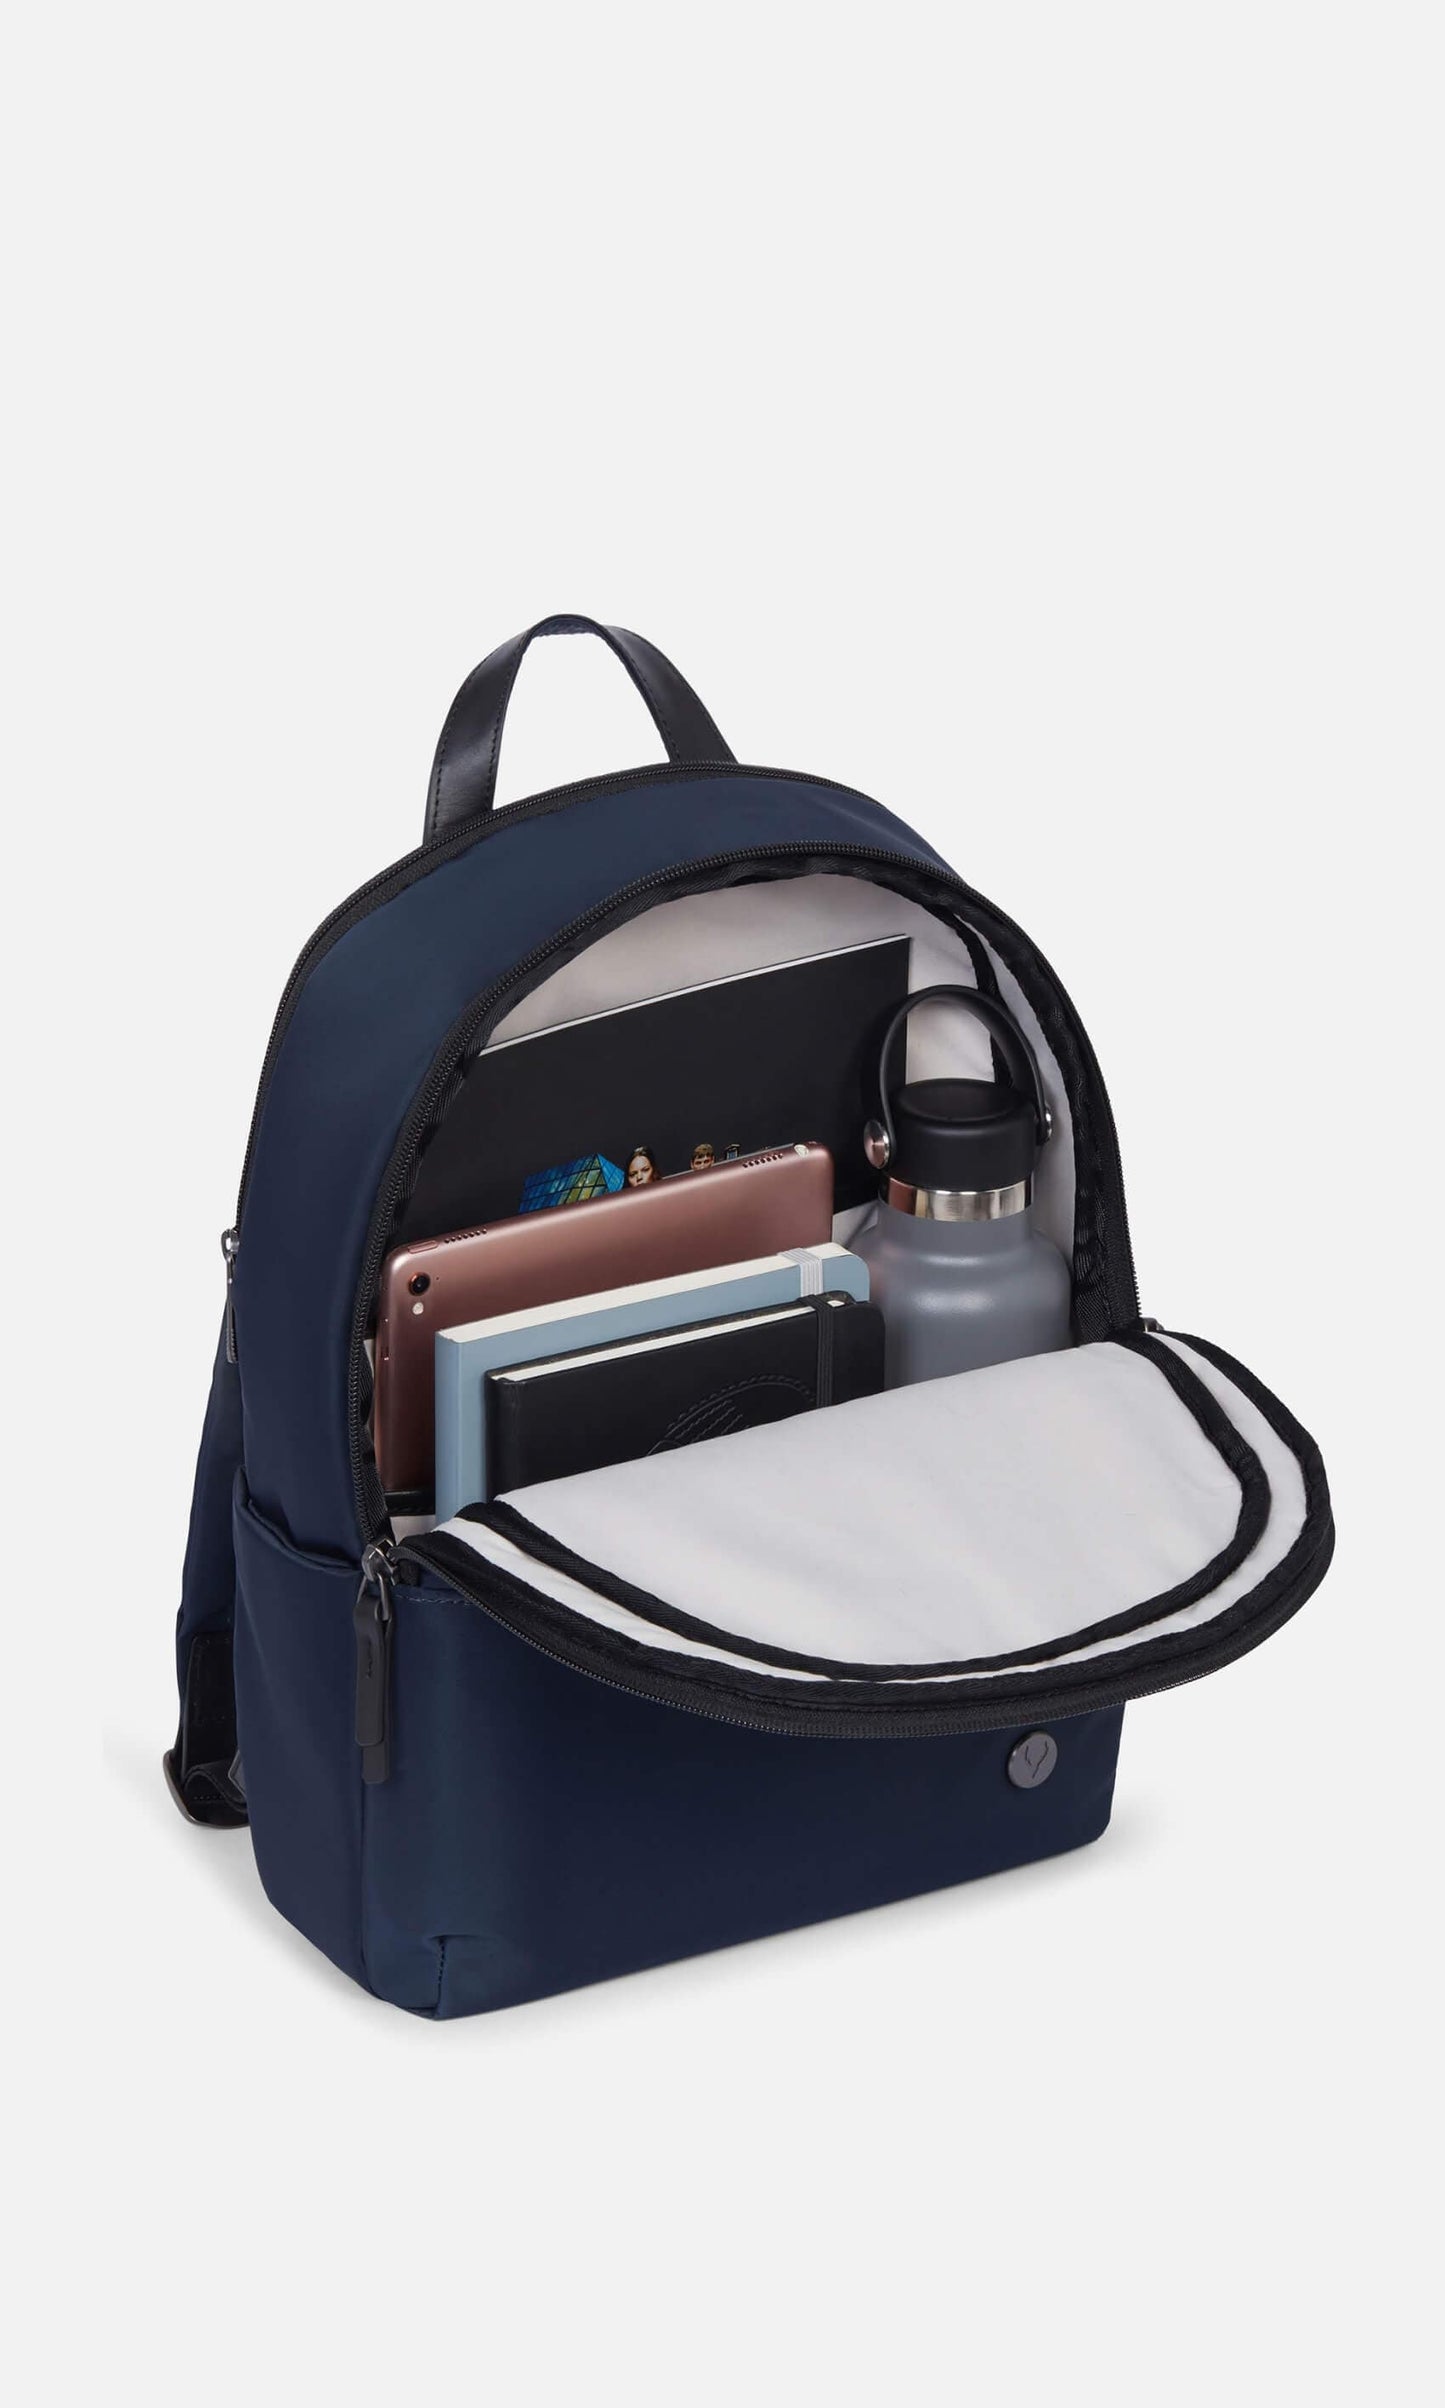 Antler Luggage -  Chelsea daypack in navy - Chelsea Backpack Navy | Travel & Lifestyle Bags | Antler UK